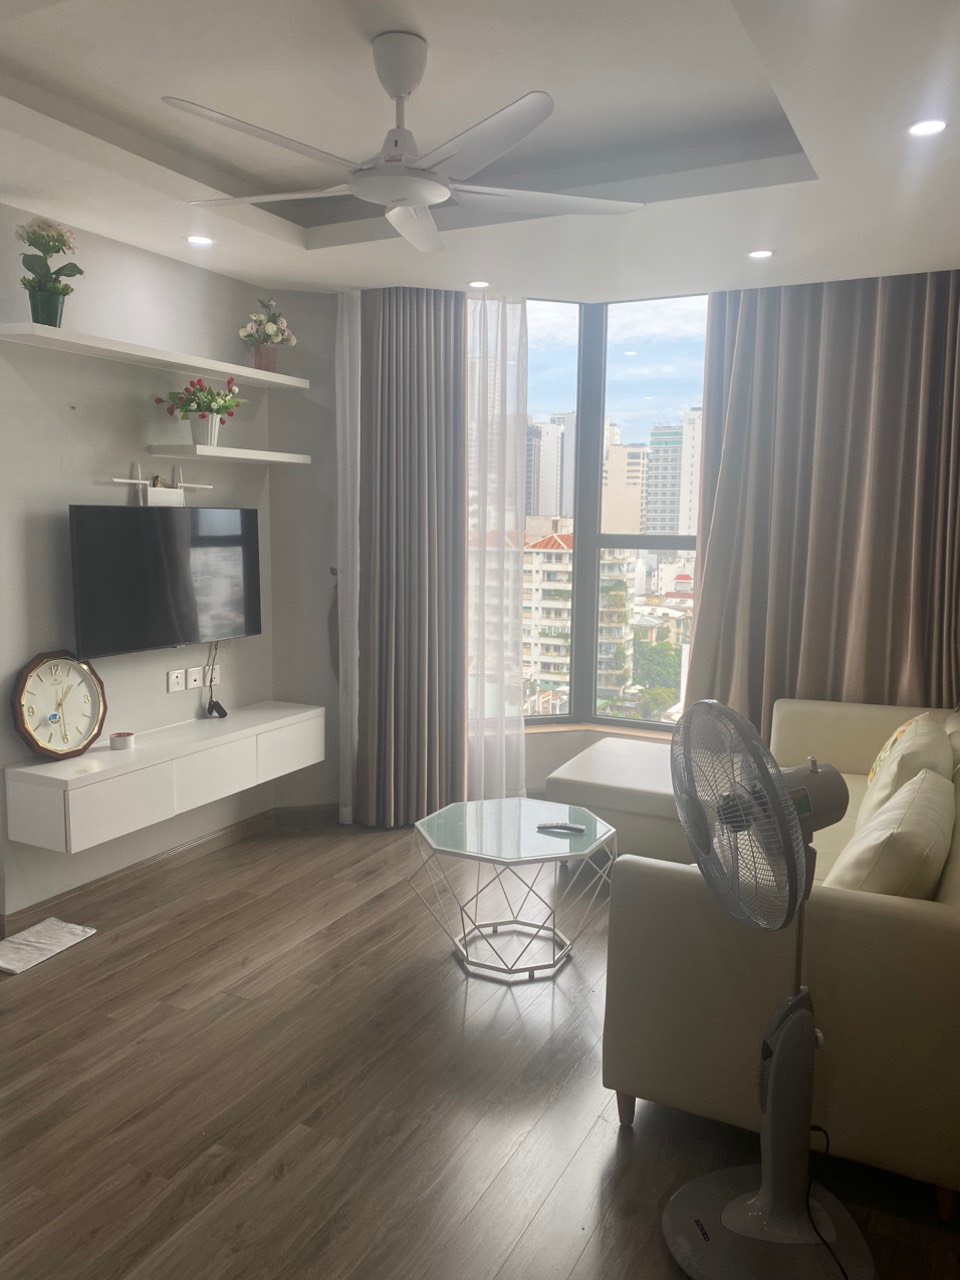 Hud Building Nha Trang apartment for rent| 2 bedroom | 13 million